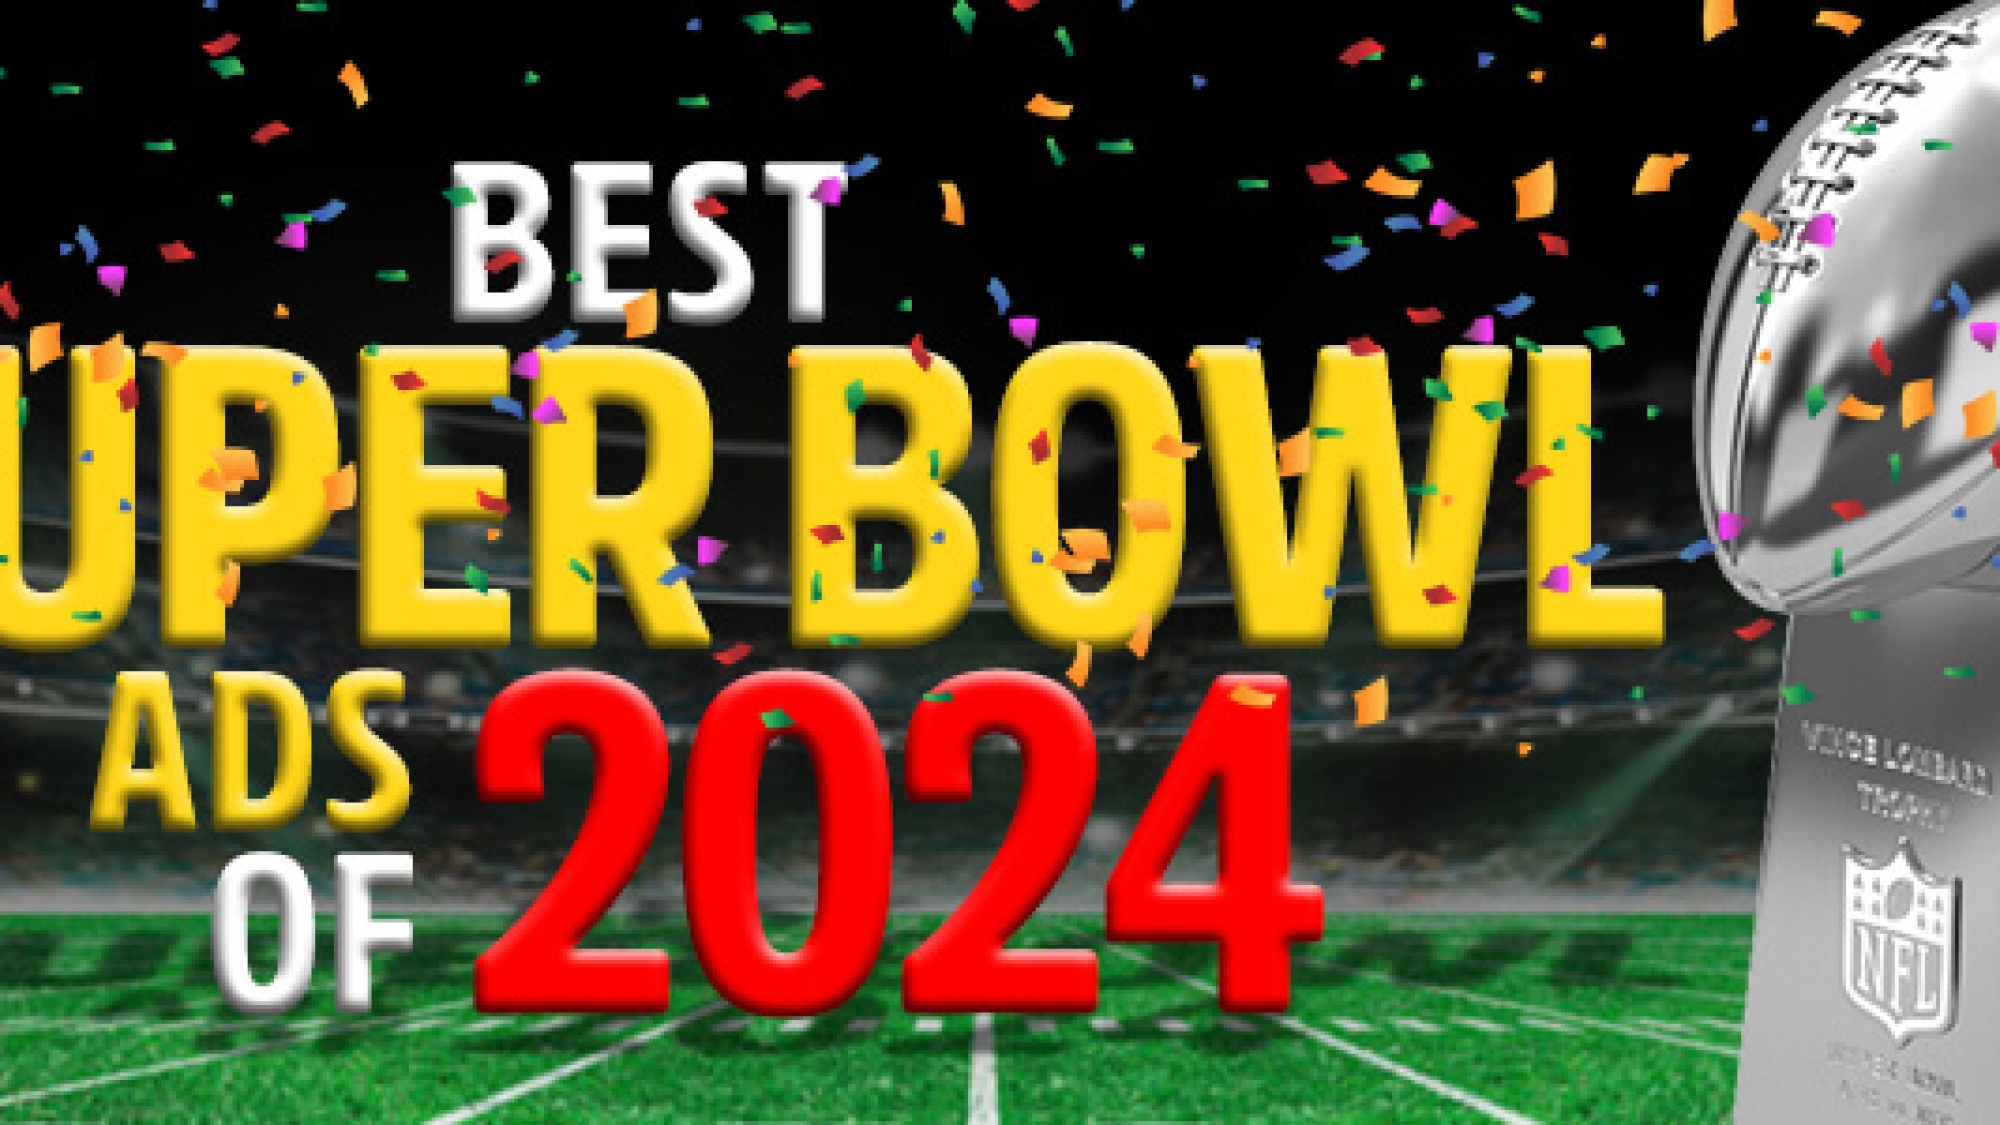 240209-JCI-Blog-Post-Best-Super-Bowl-Ads-of-2024-767x300-copy.jpg